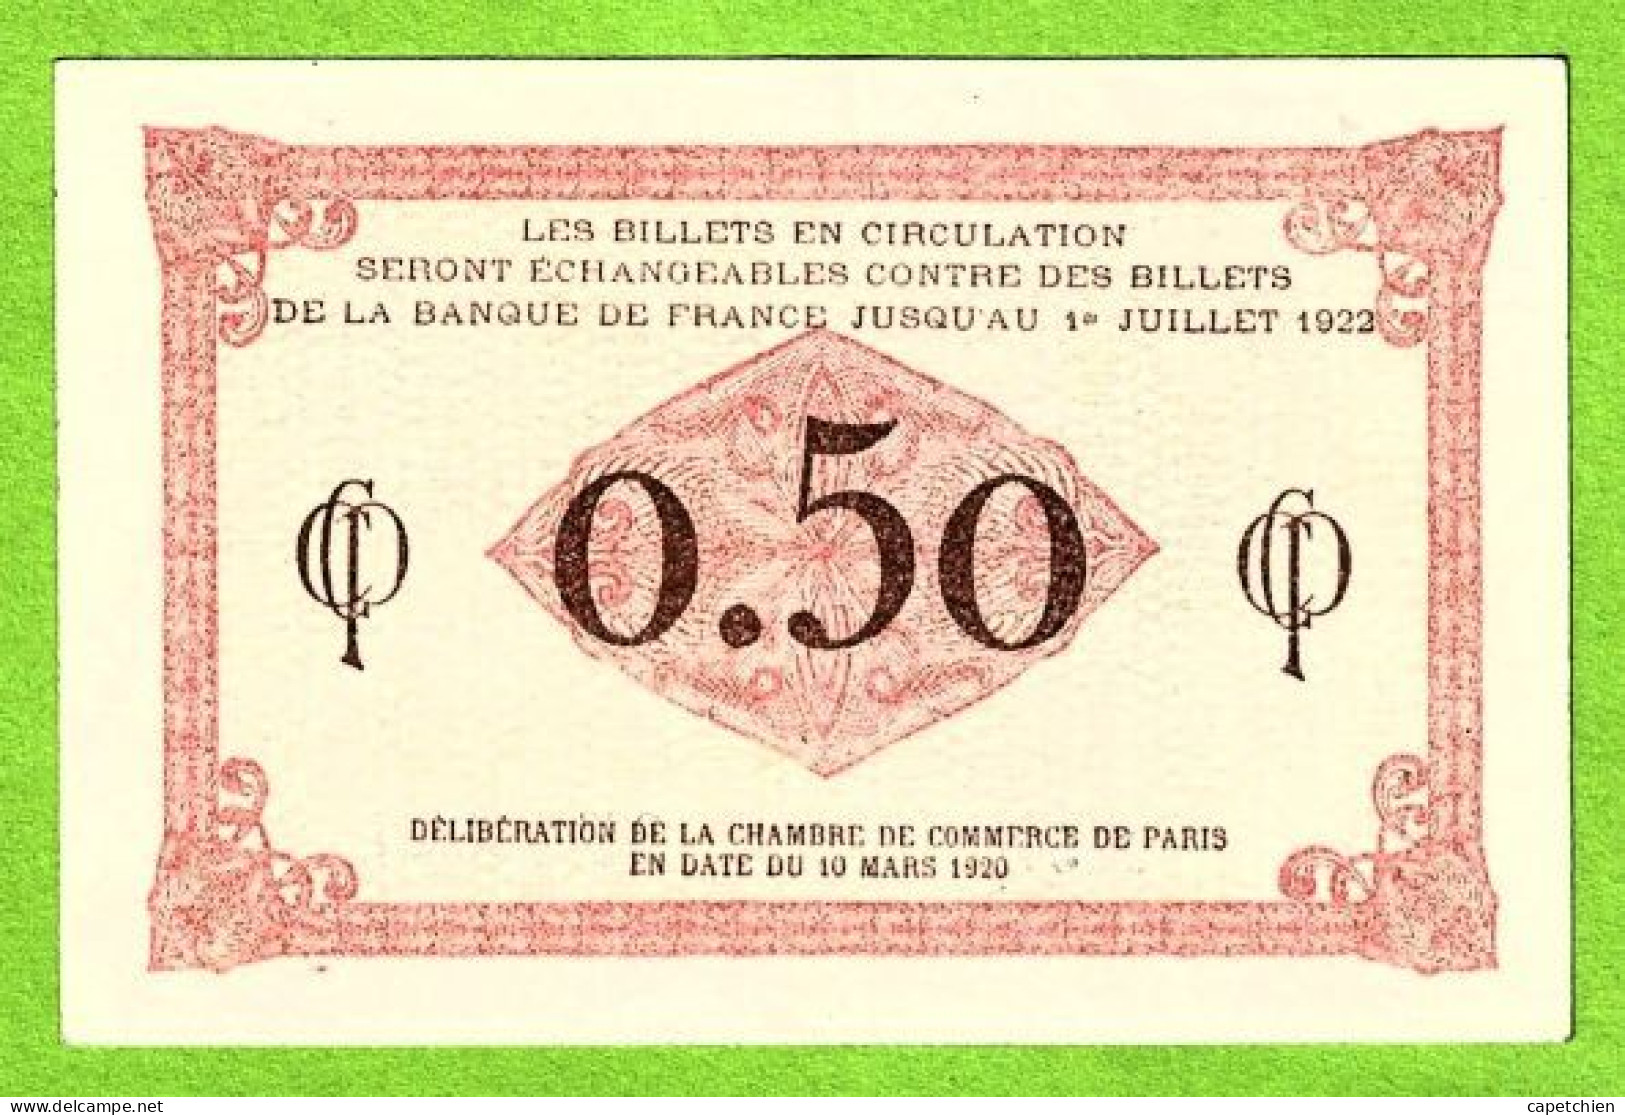 FRANCE / CHAMBRE De COMMERCE De PARIS / 50 CENT. / 10 MARS 1920 / N° 071,881 / SERIE F 37 / NEUF - Chamber Of Commerce